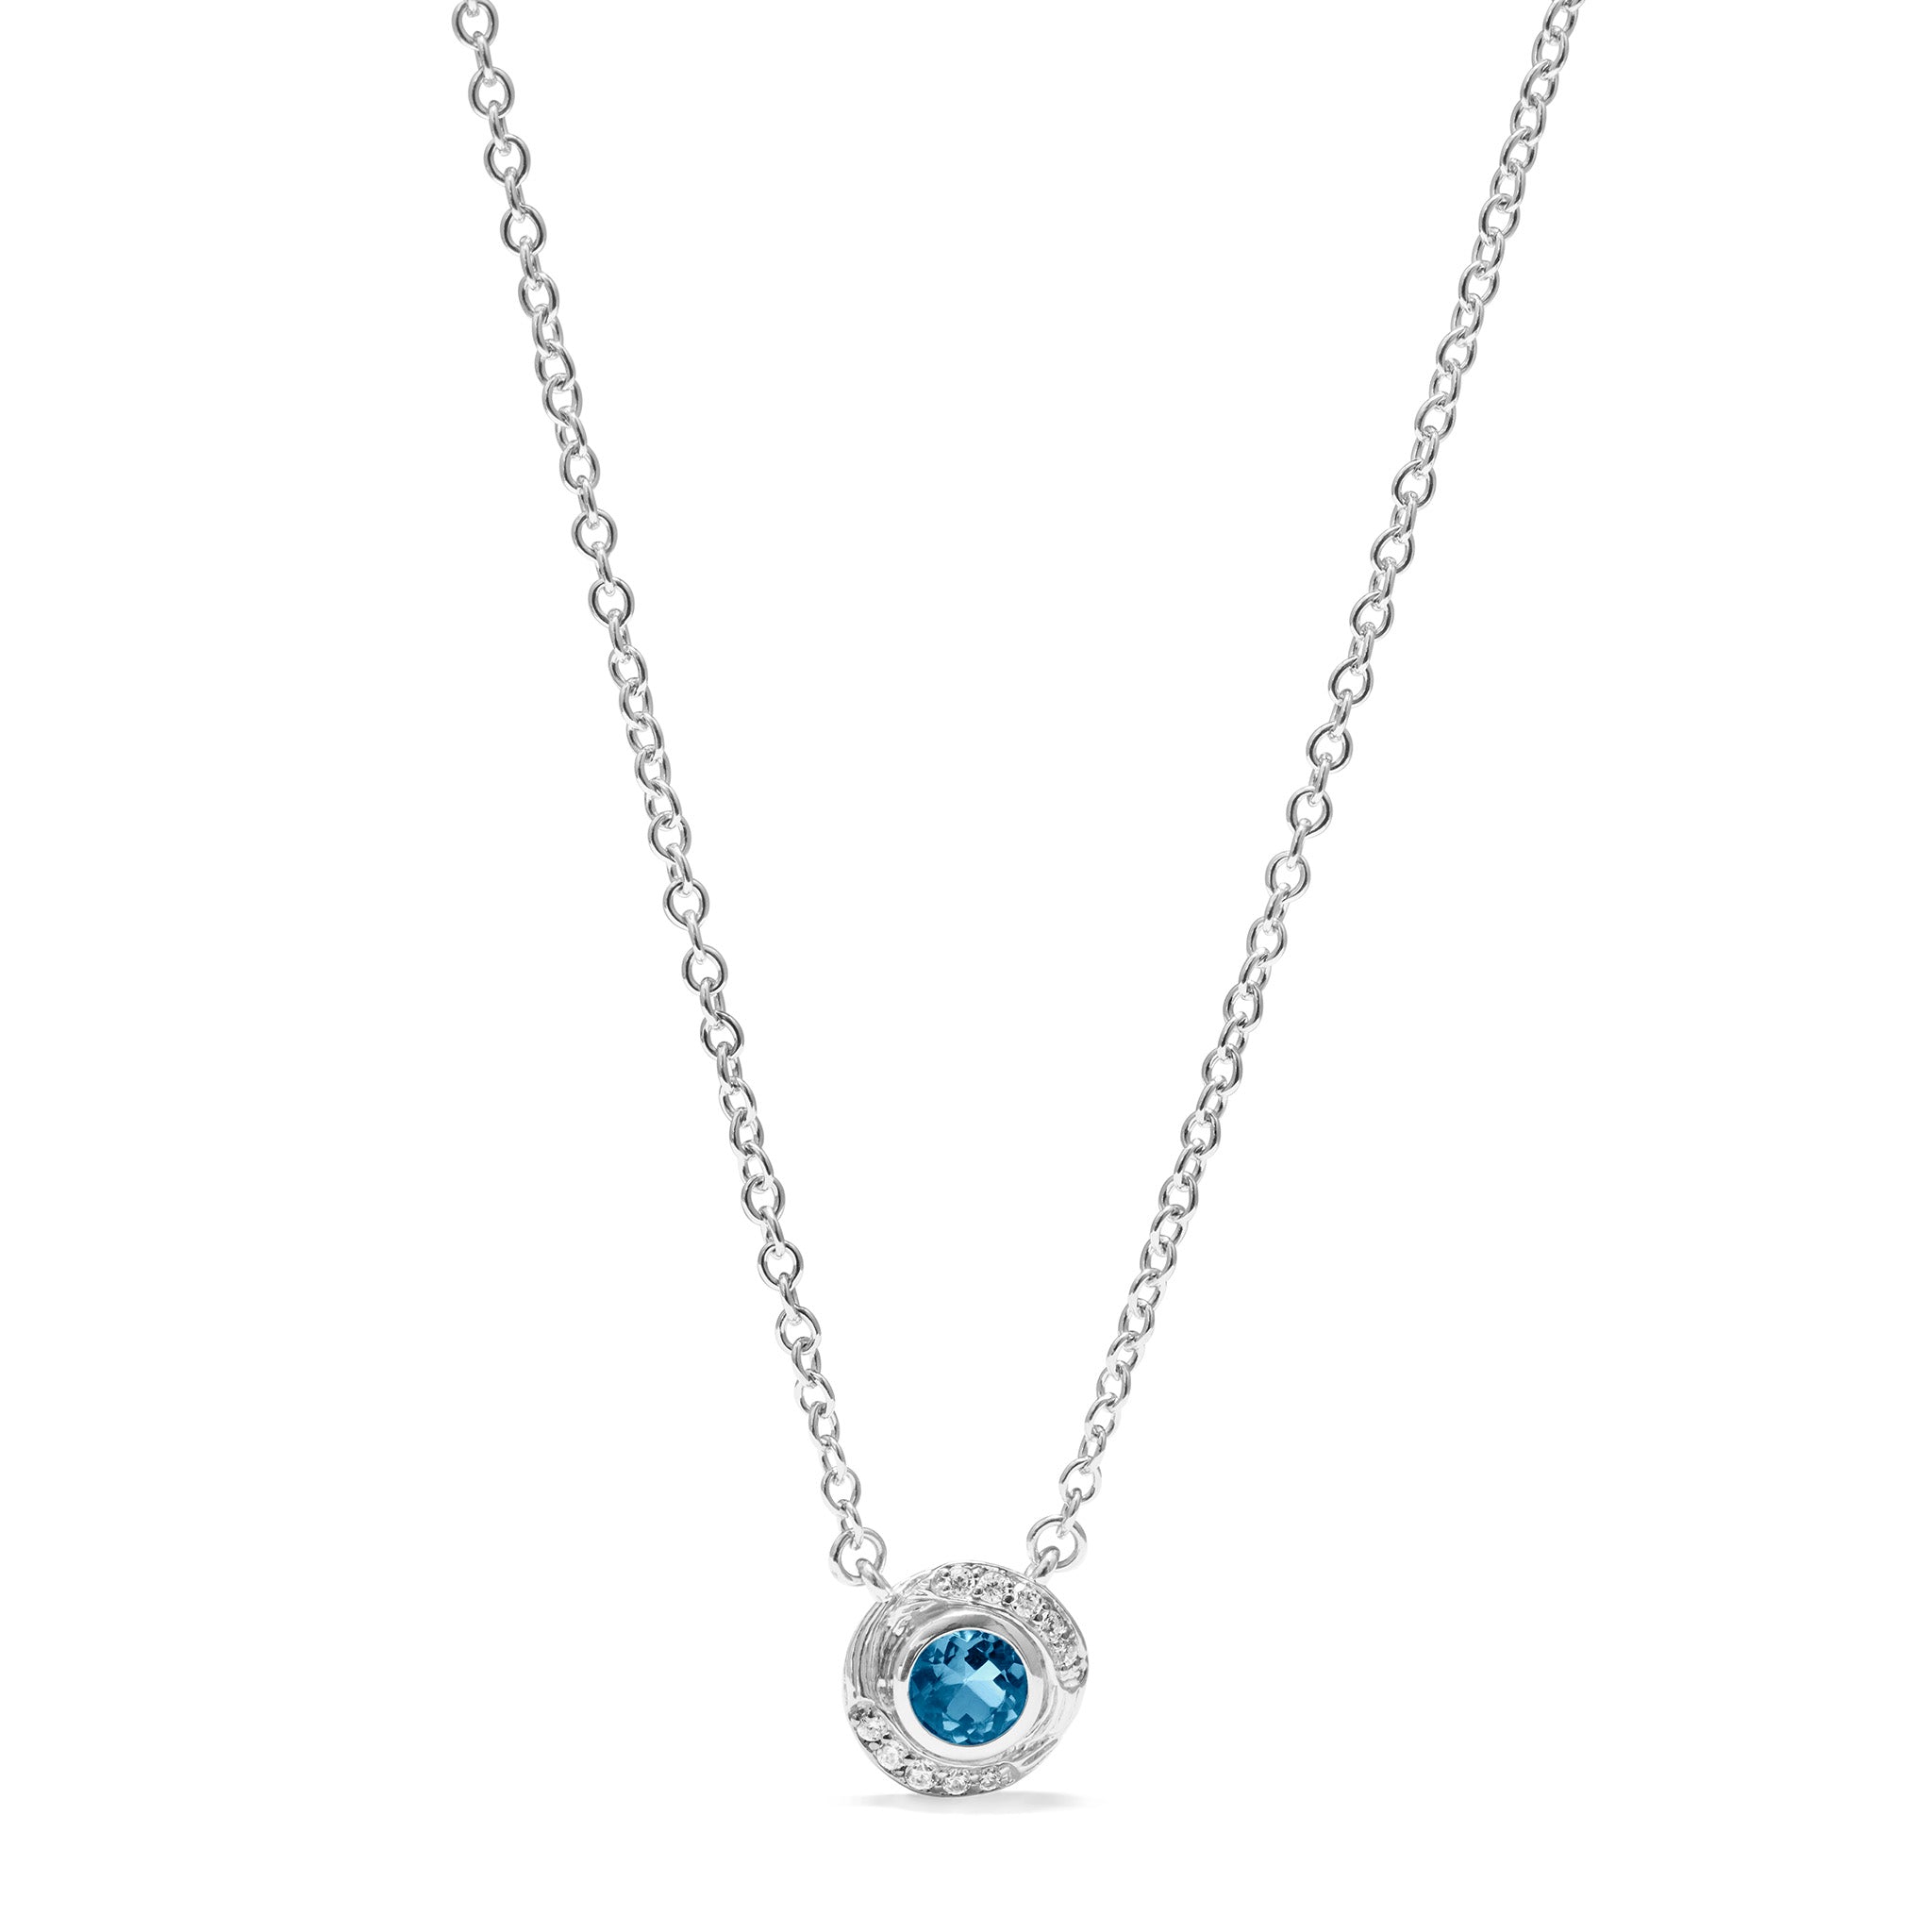 Santorini Necklace with London Blue Topaz and Diamonds